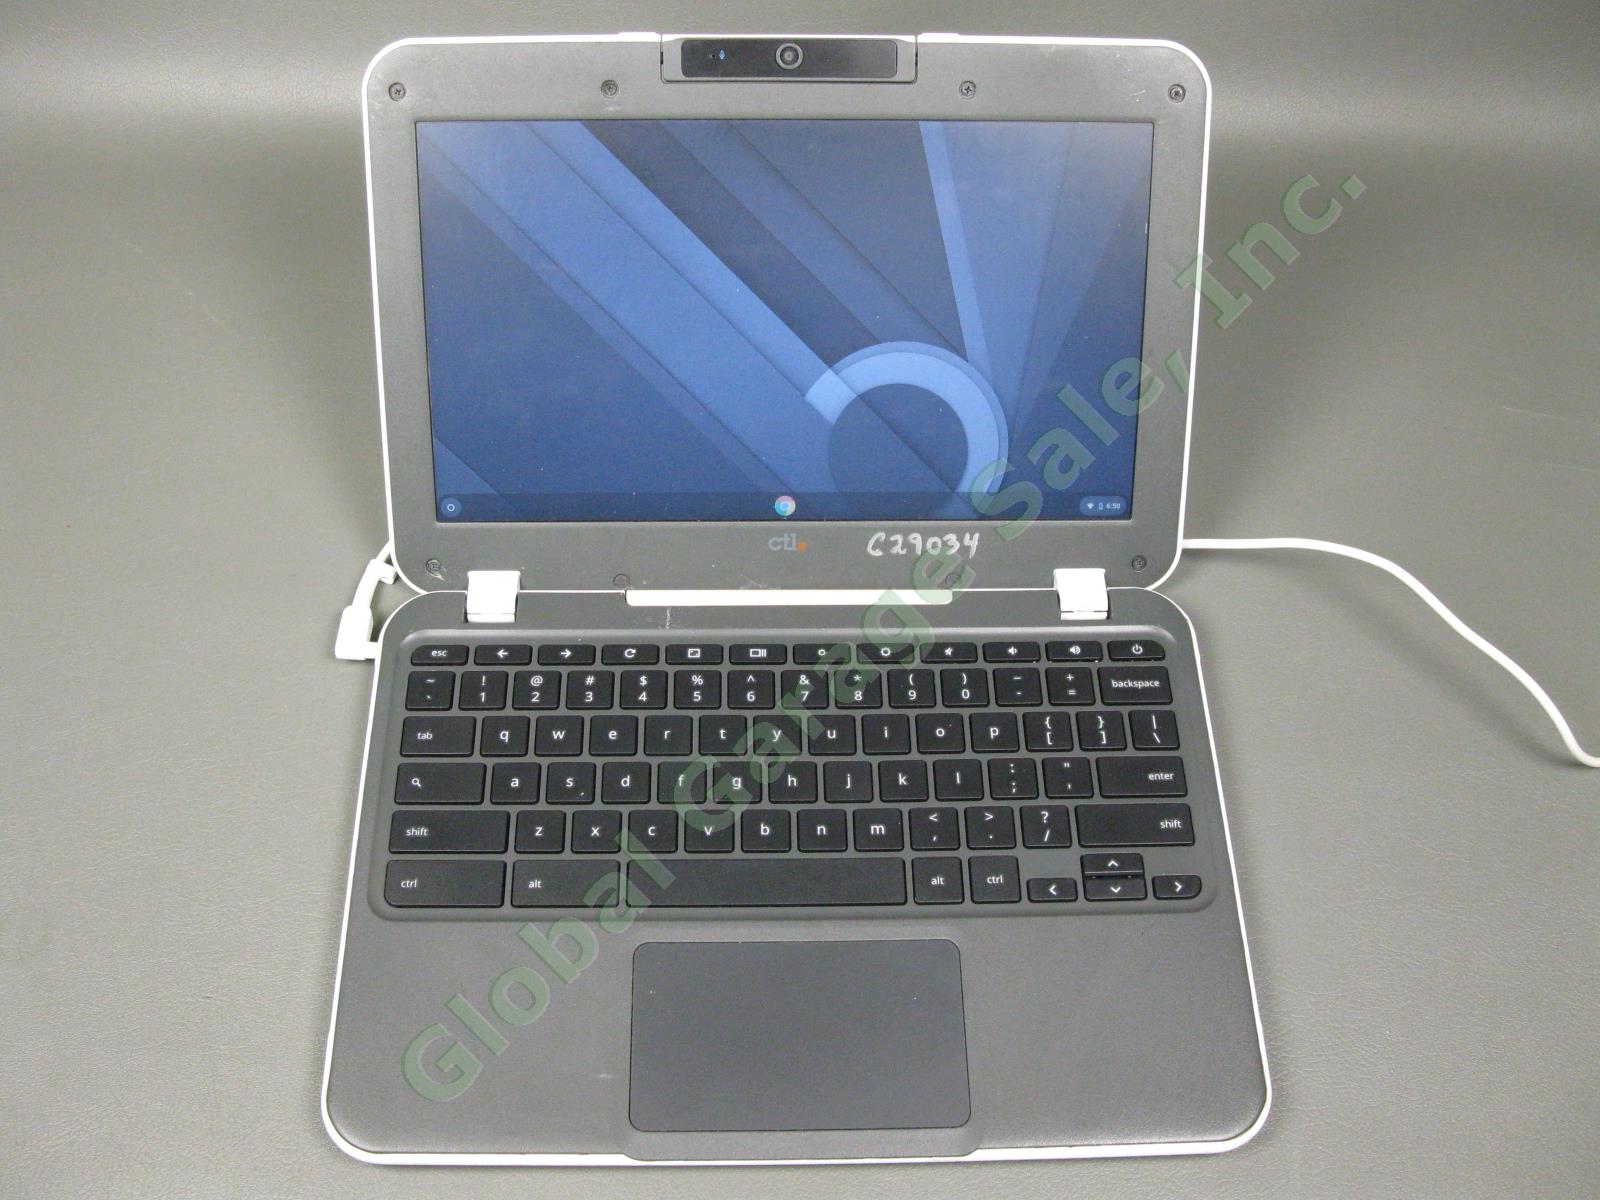 5 CTL NL6 Chromebook Notebook Laptops Lot Intel Celeron N2940 1.83GHz 4GB RAM 1